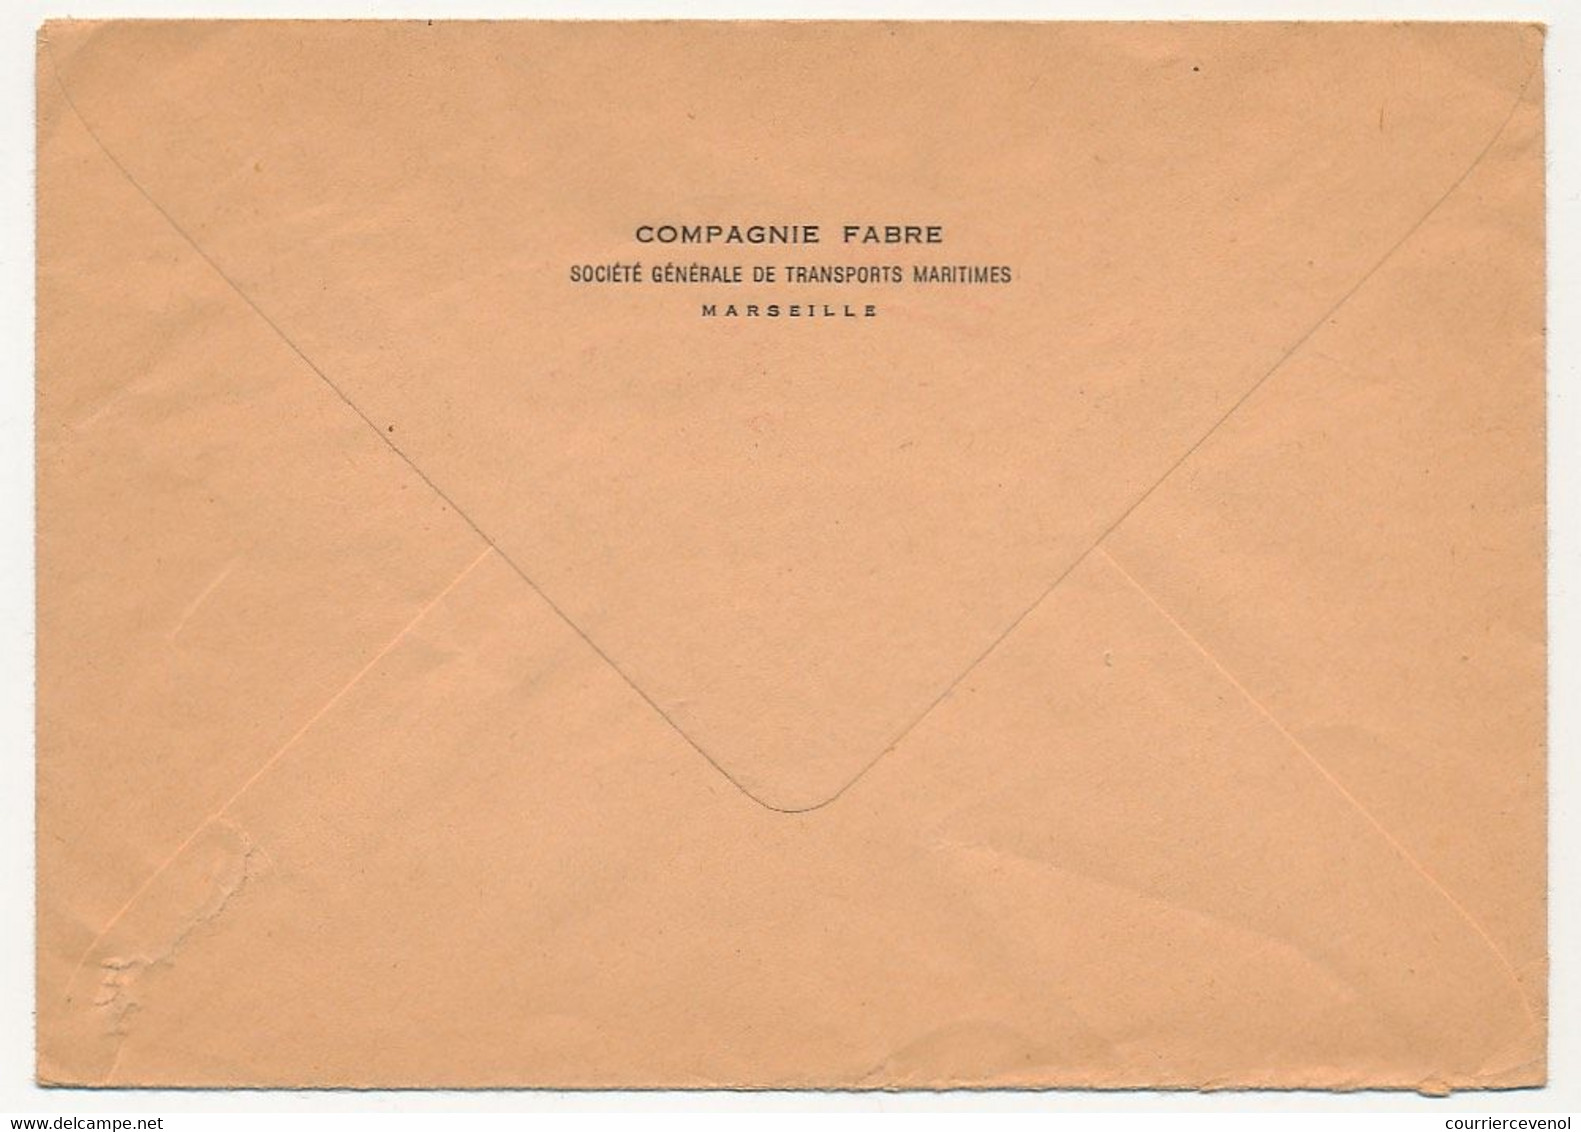 FRANCE - Enveloppe EMA - Compagnie FABRE S.G.T.M. Armement Consignation - MARSEILLE 01 - 7/5/1973 - Freistempel